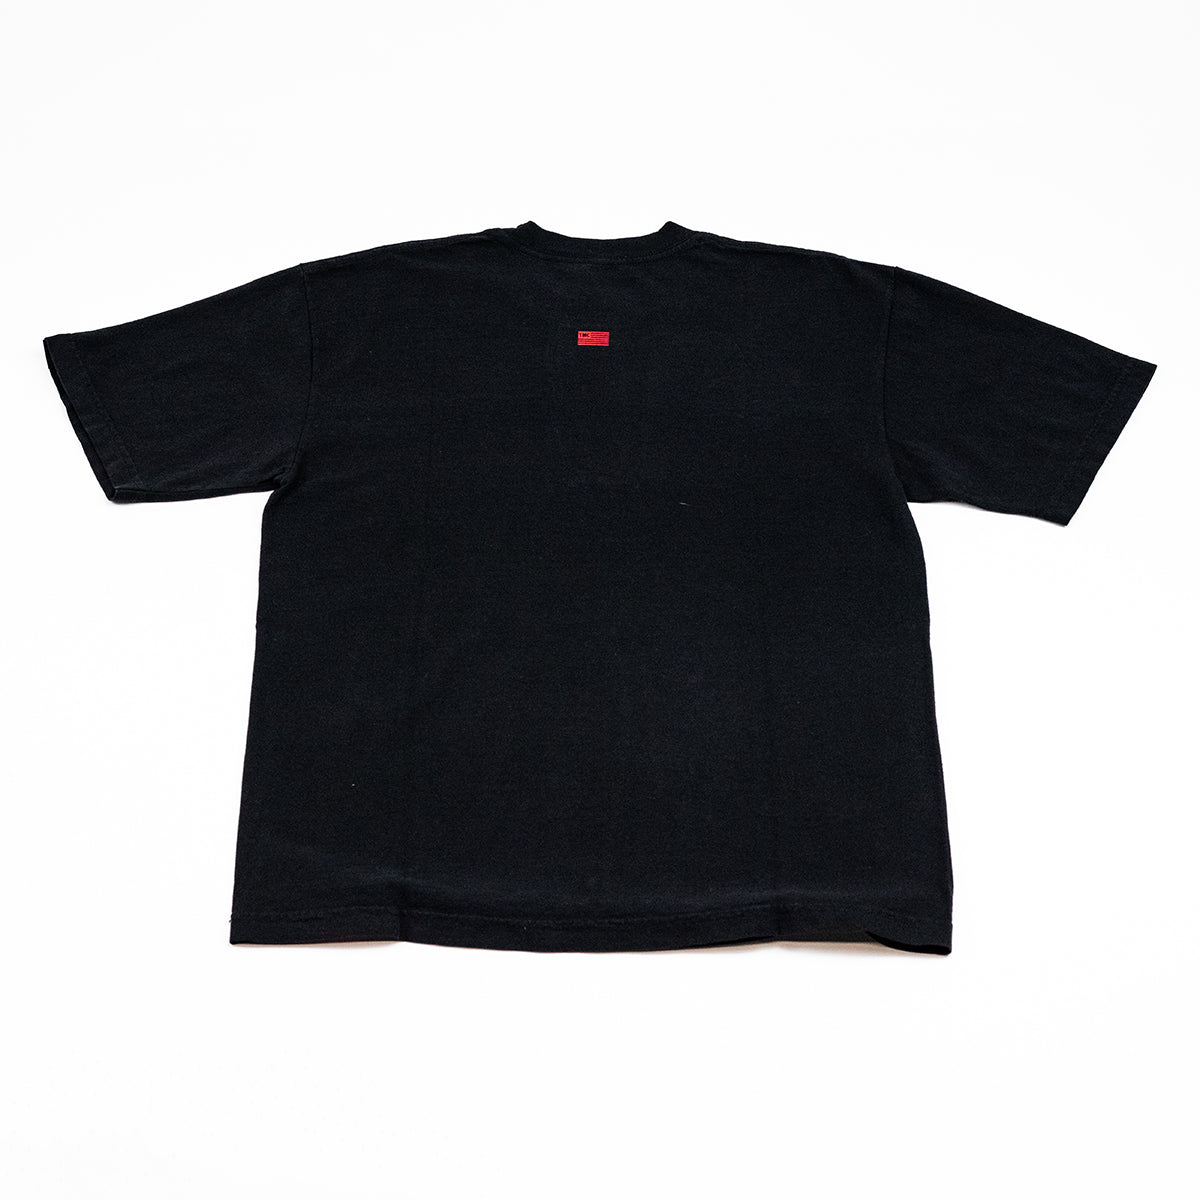 Profit T-shirt - Black - Rear